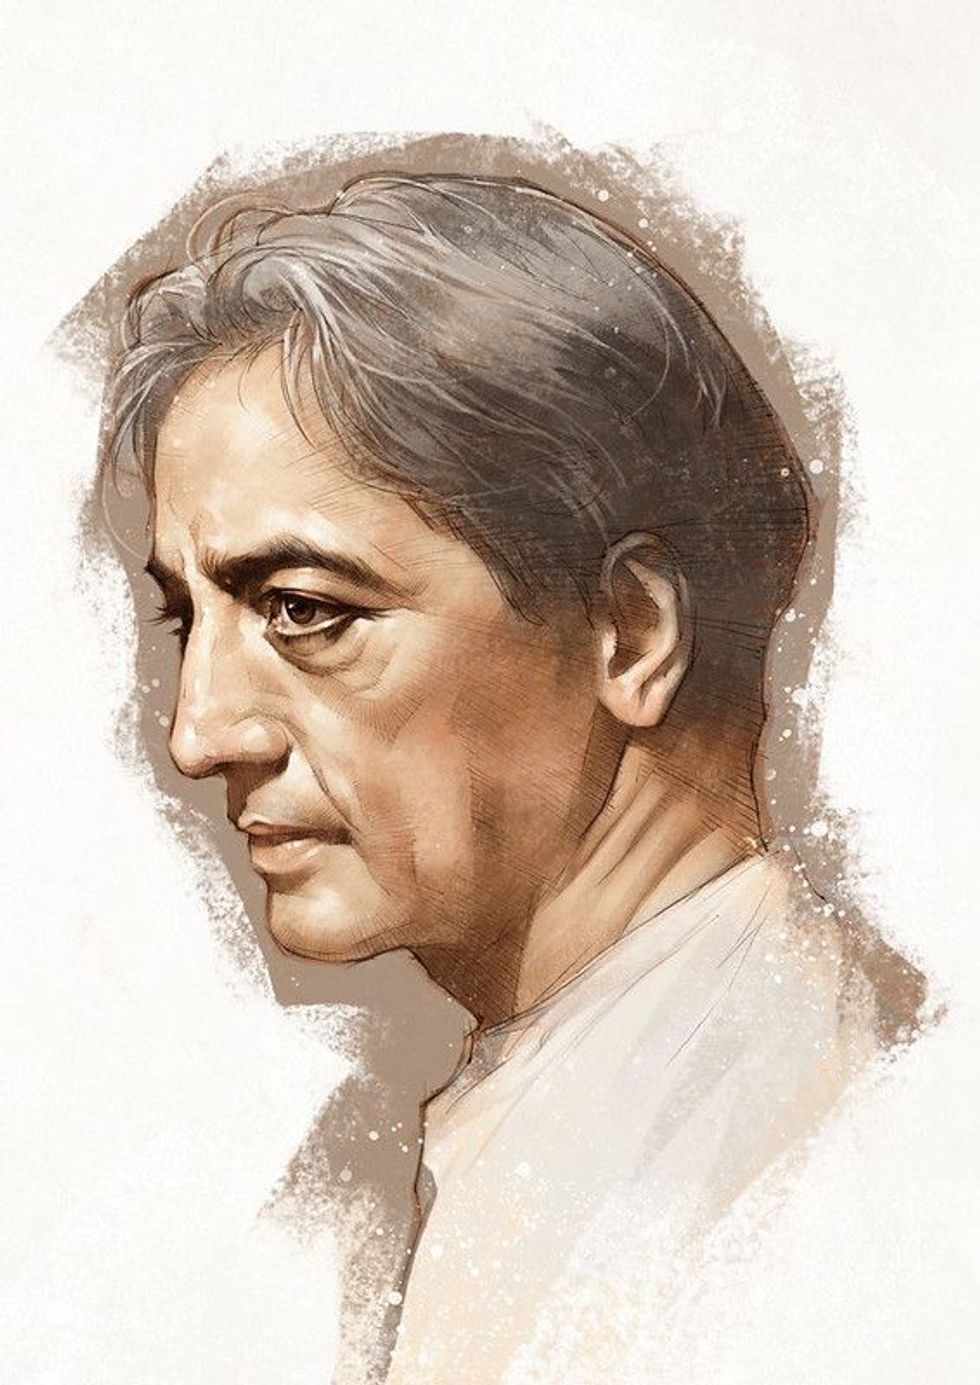 Illustration of Jiddu Krishnamurti, an Indian philosopher, speaker and writer.